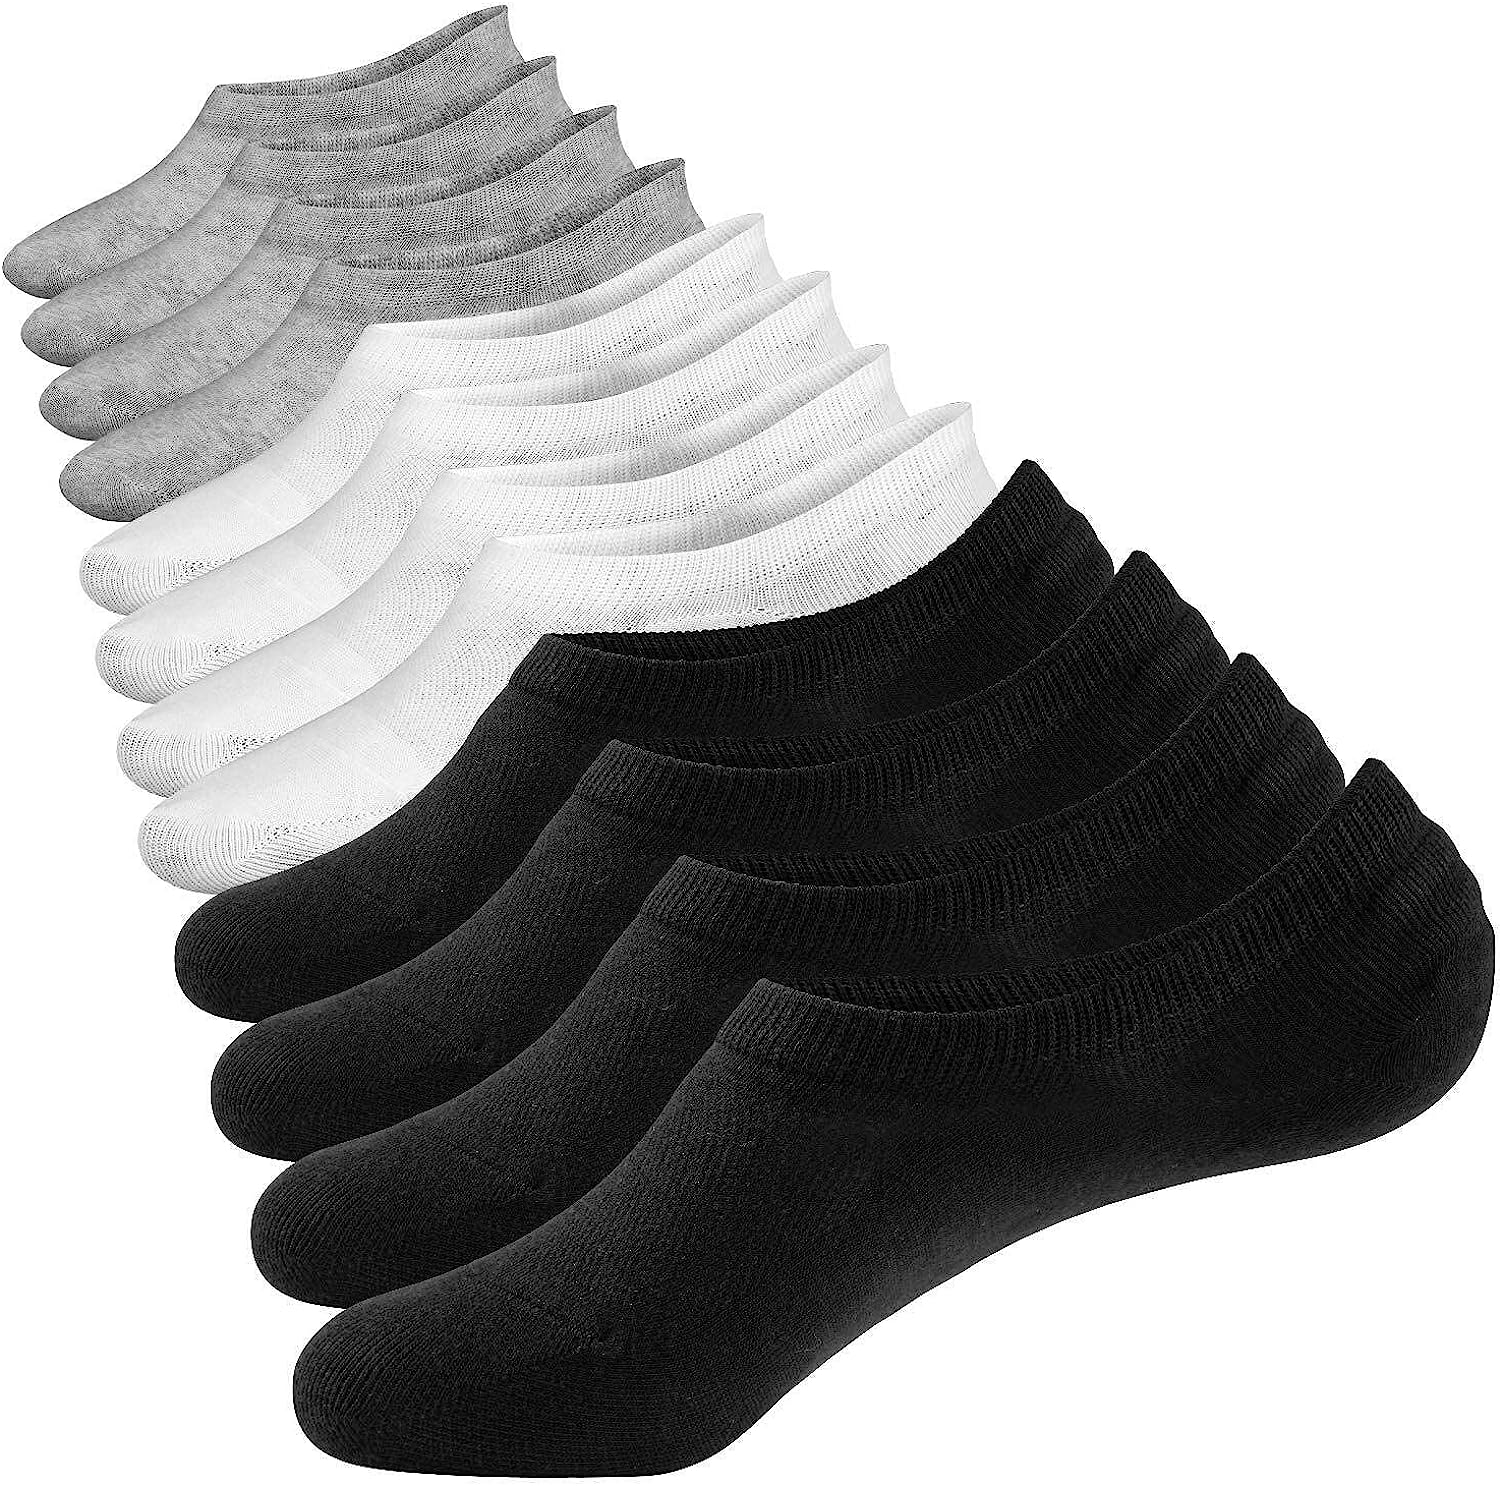 Closemate No Show Socks Mens Women with Anti-Slip Silicone Stripes, 6 ...